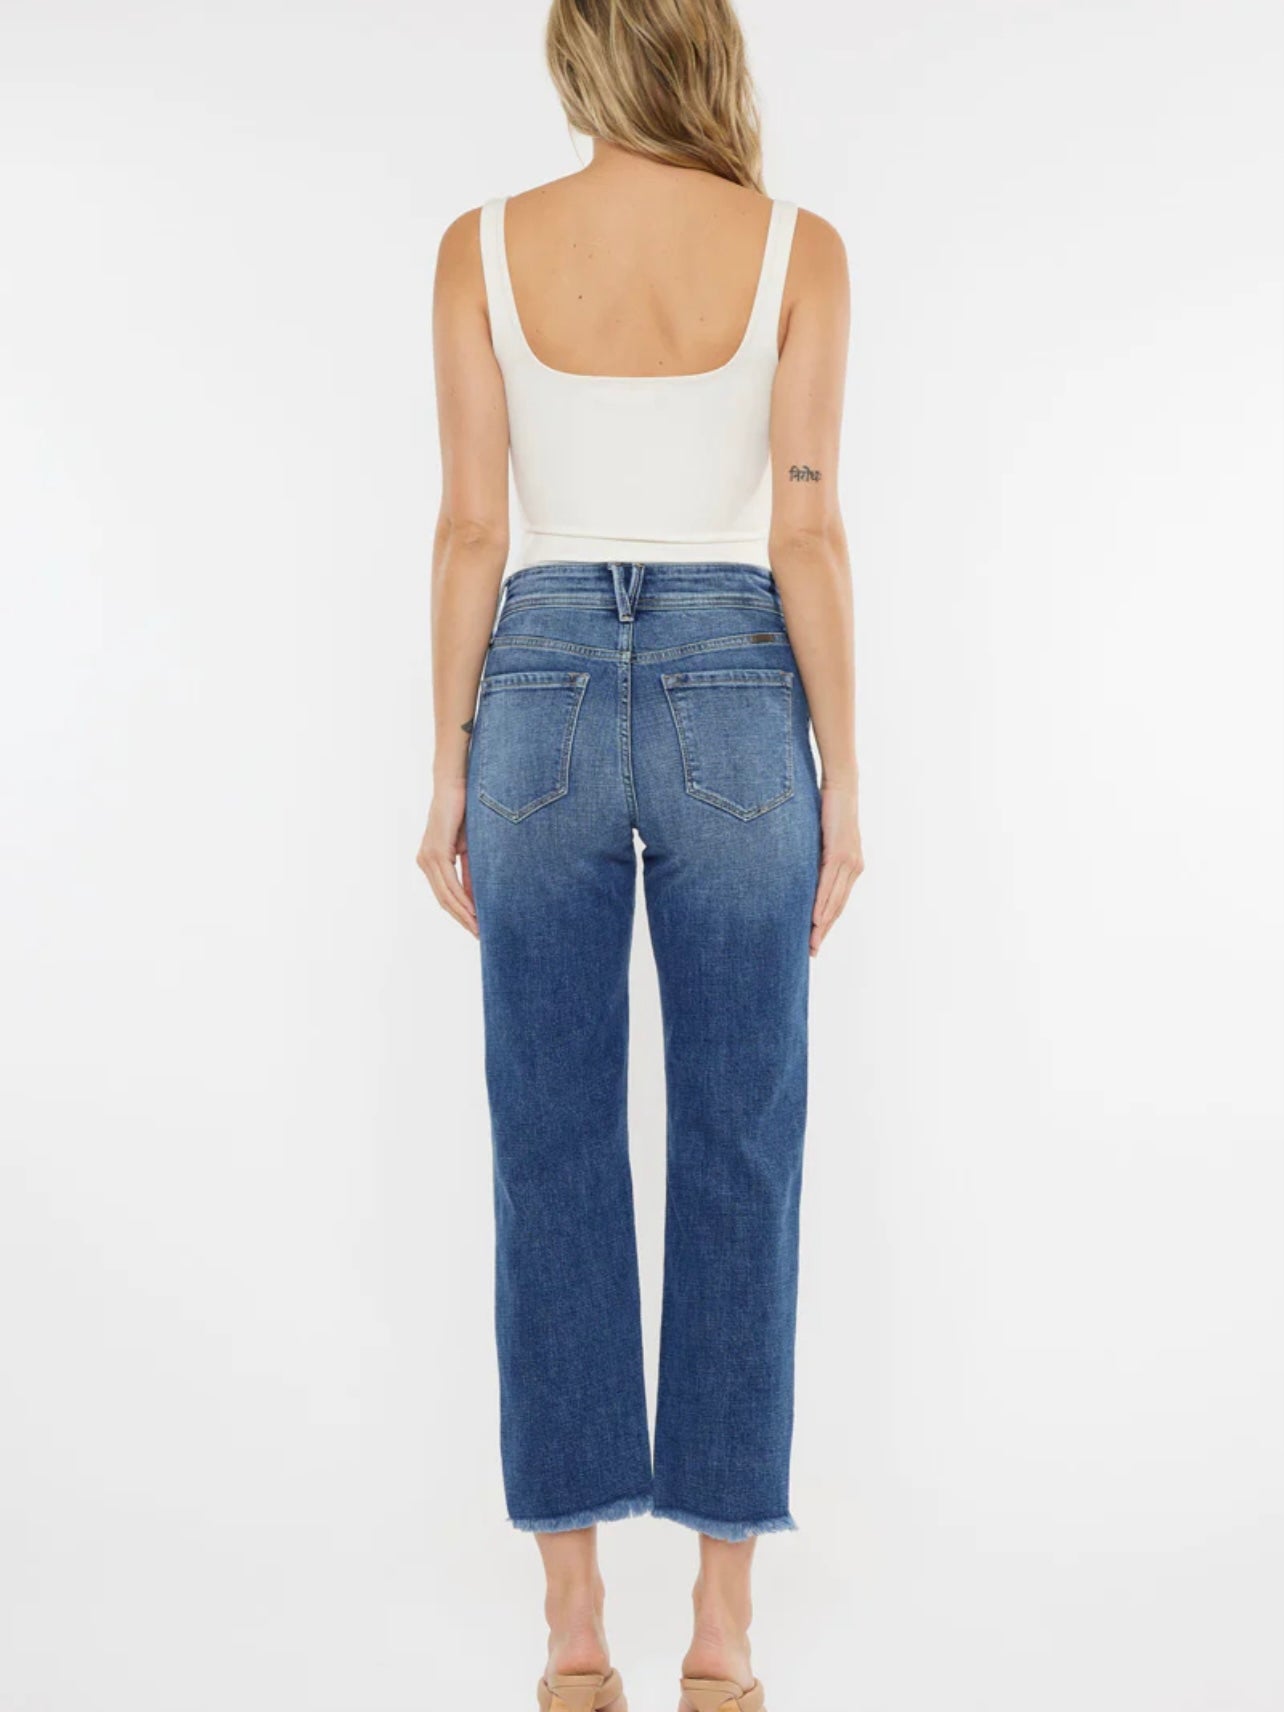 The Nancy High Rise Slim Straight Jeans in Medium Wash